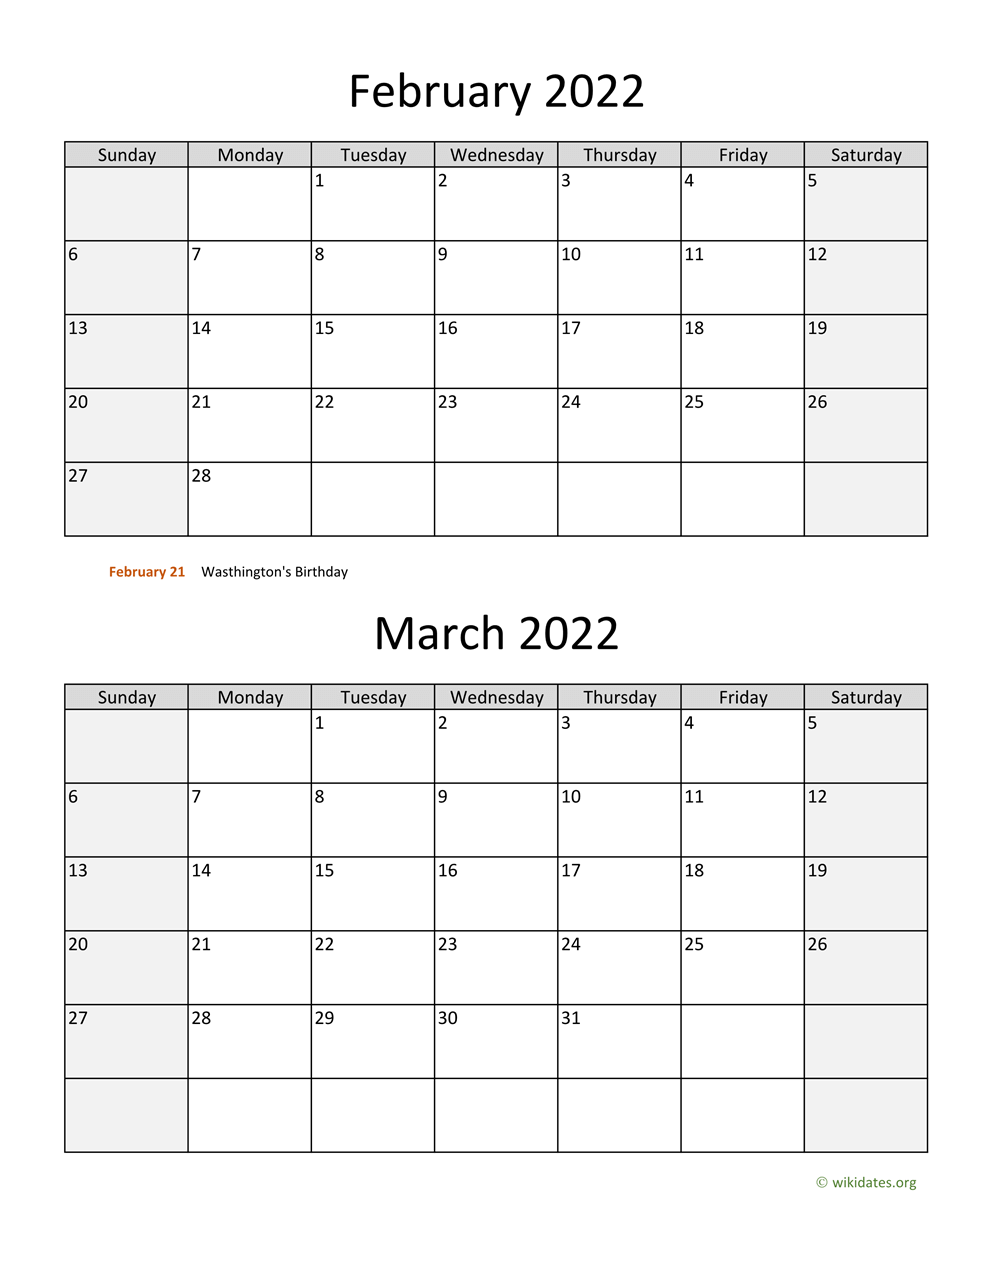 February March Calendar 2022 February And March 2022 Calendar | Wikidates.org